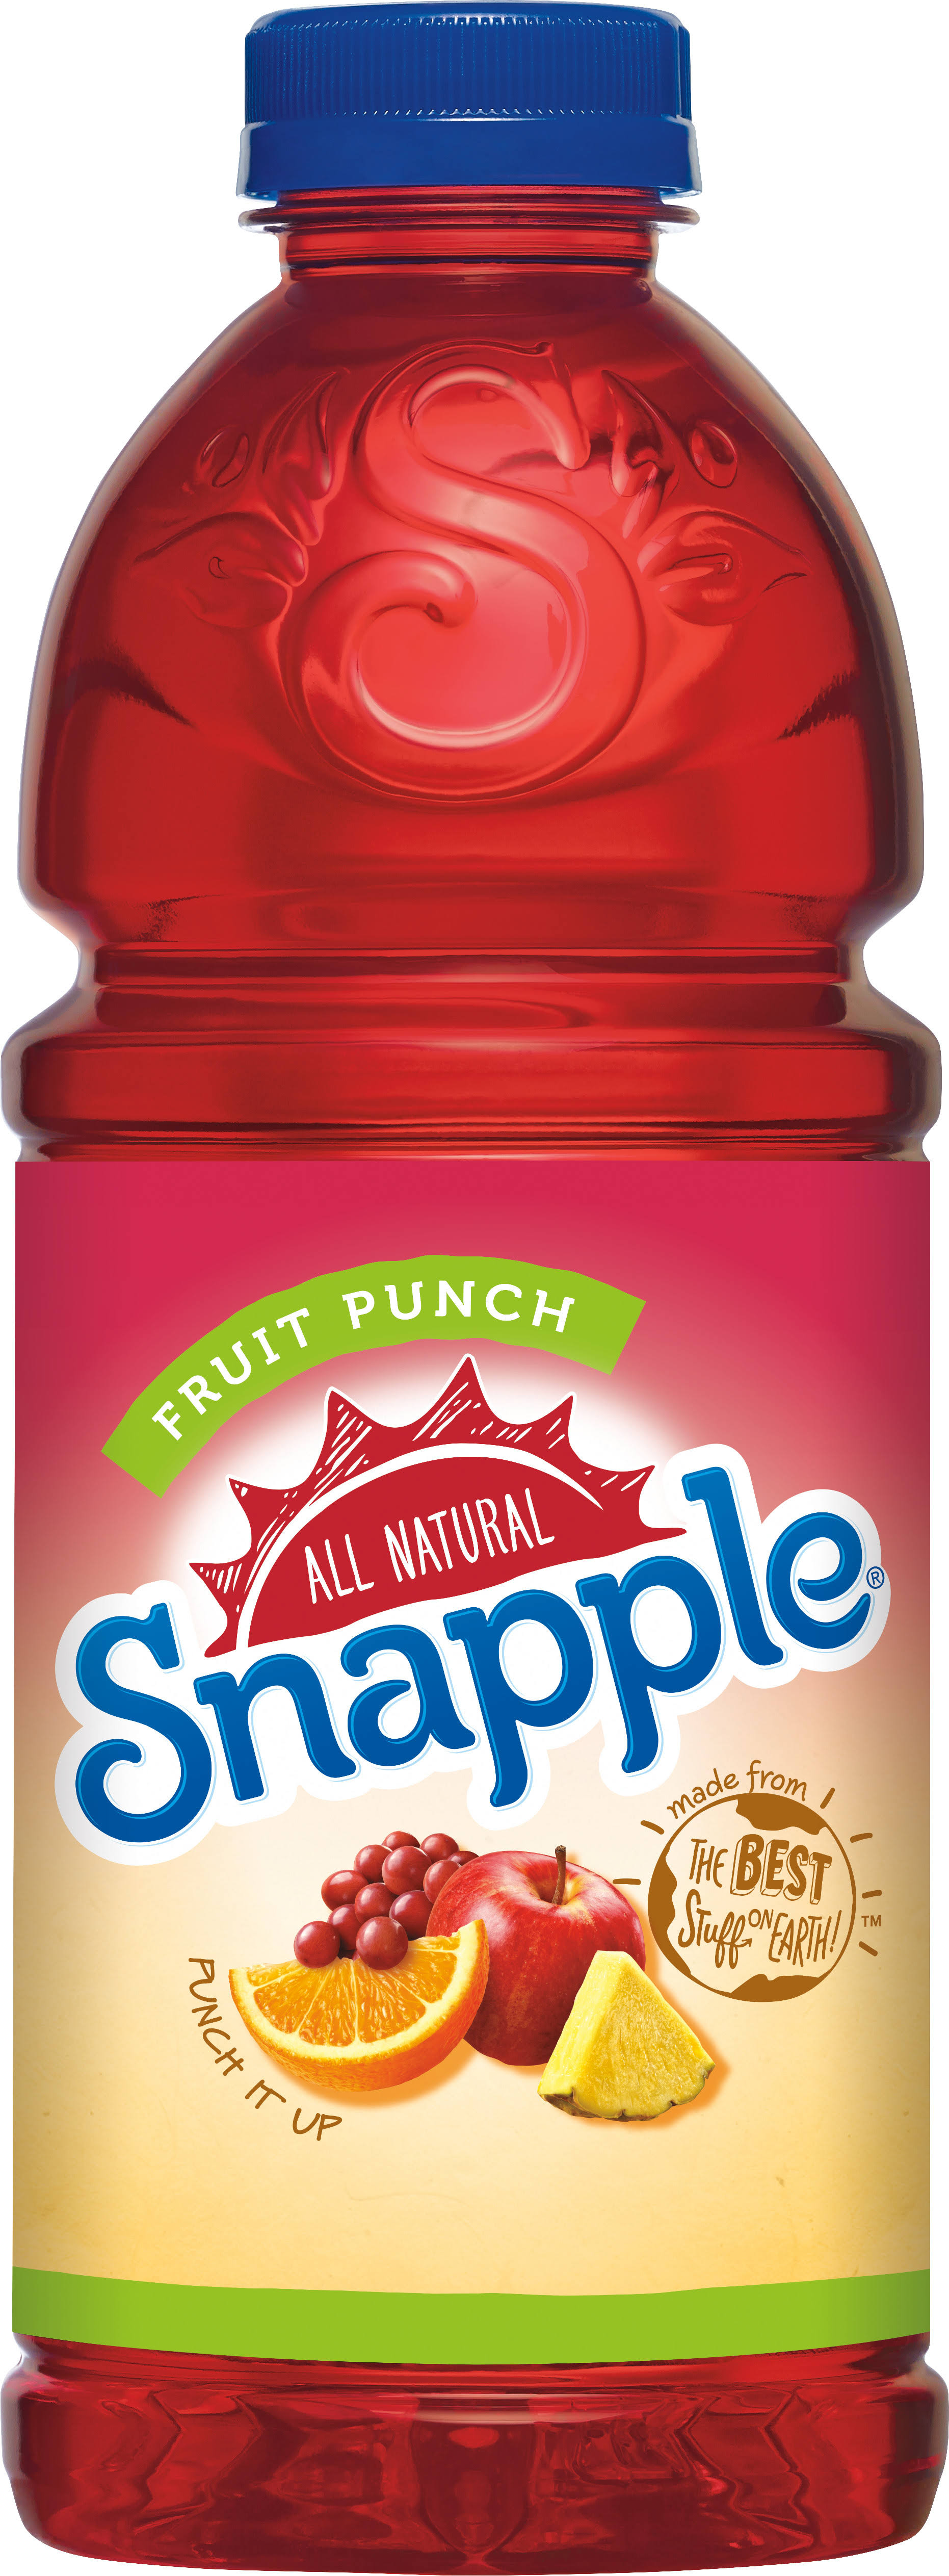 Snapple Juice Drink - Fruit Punch, 32oz